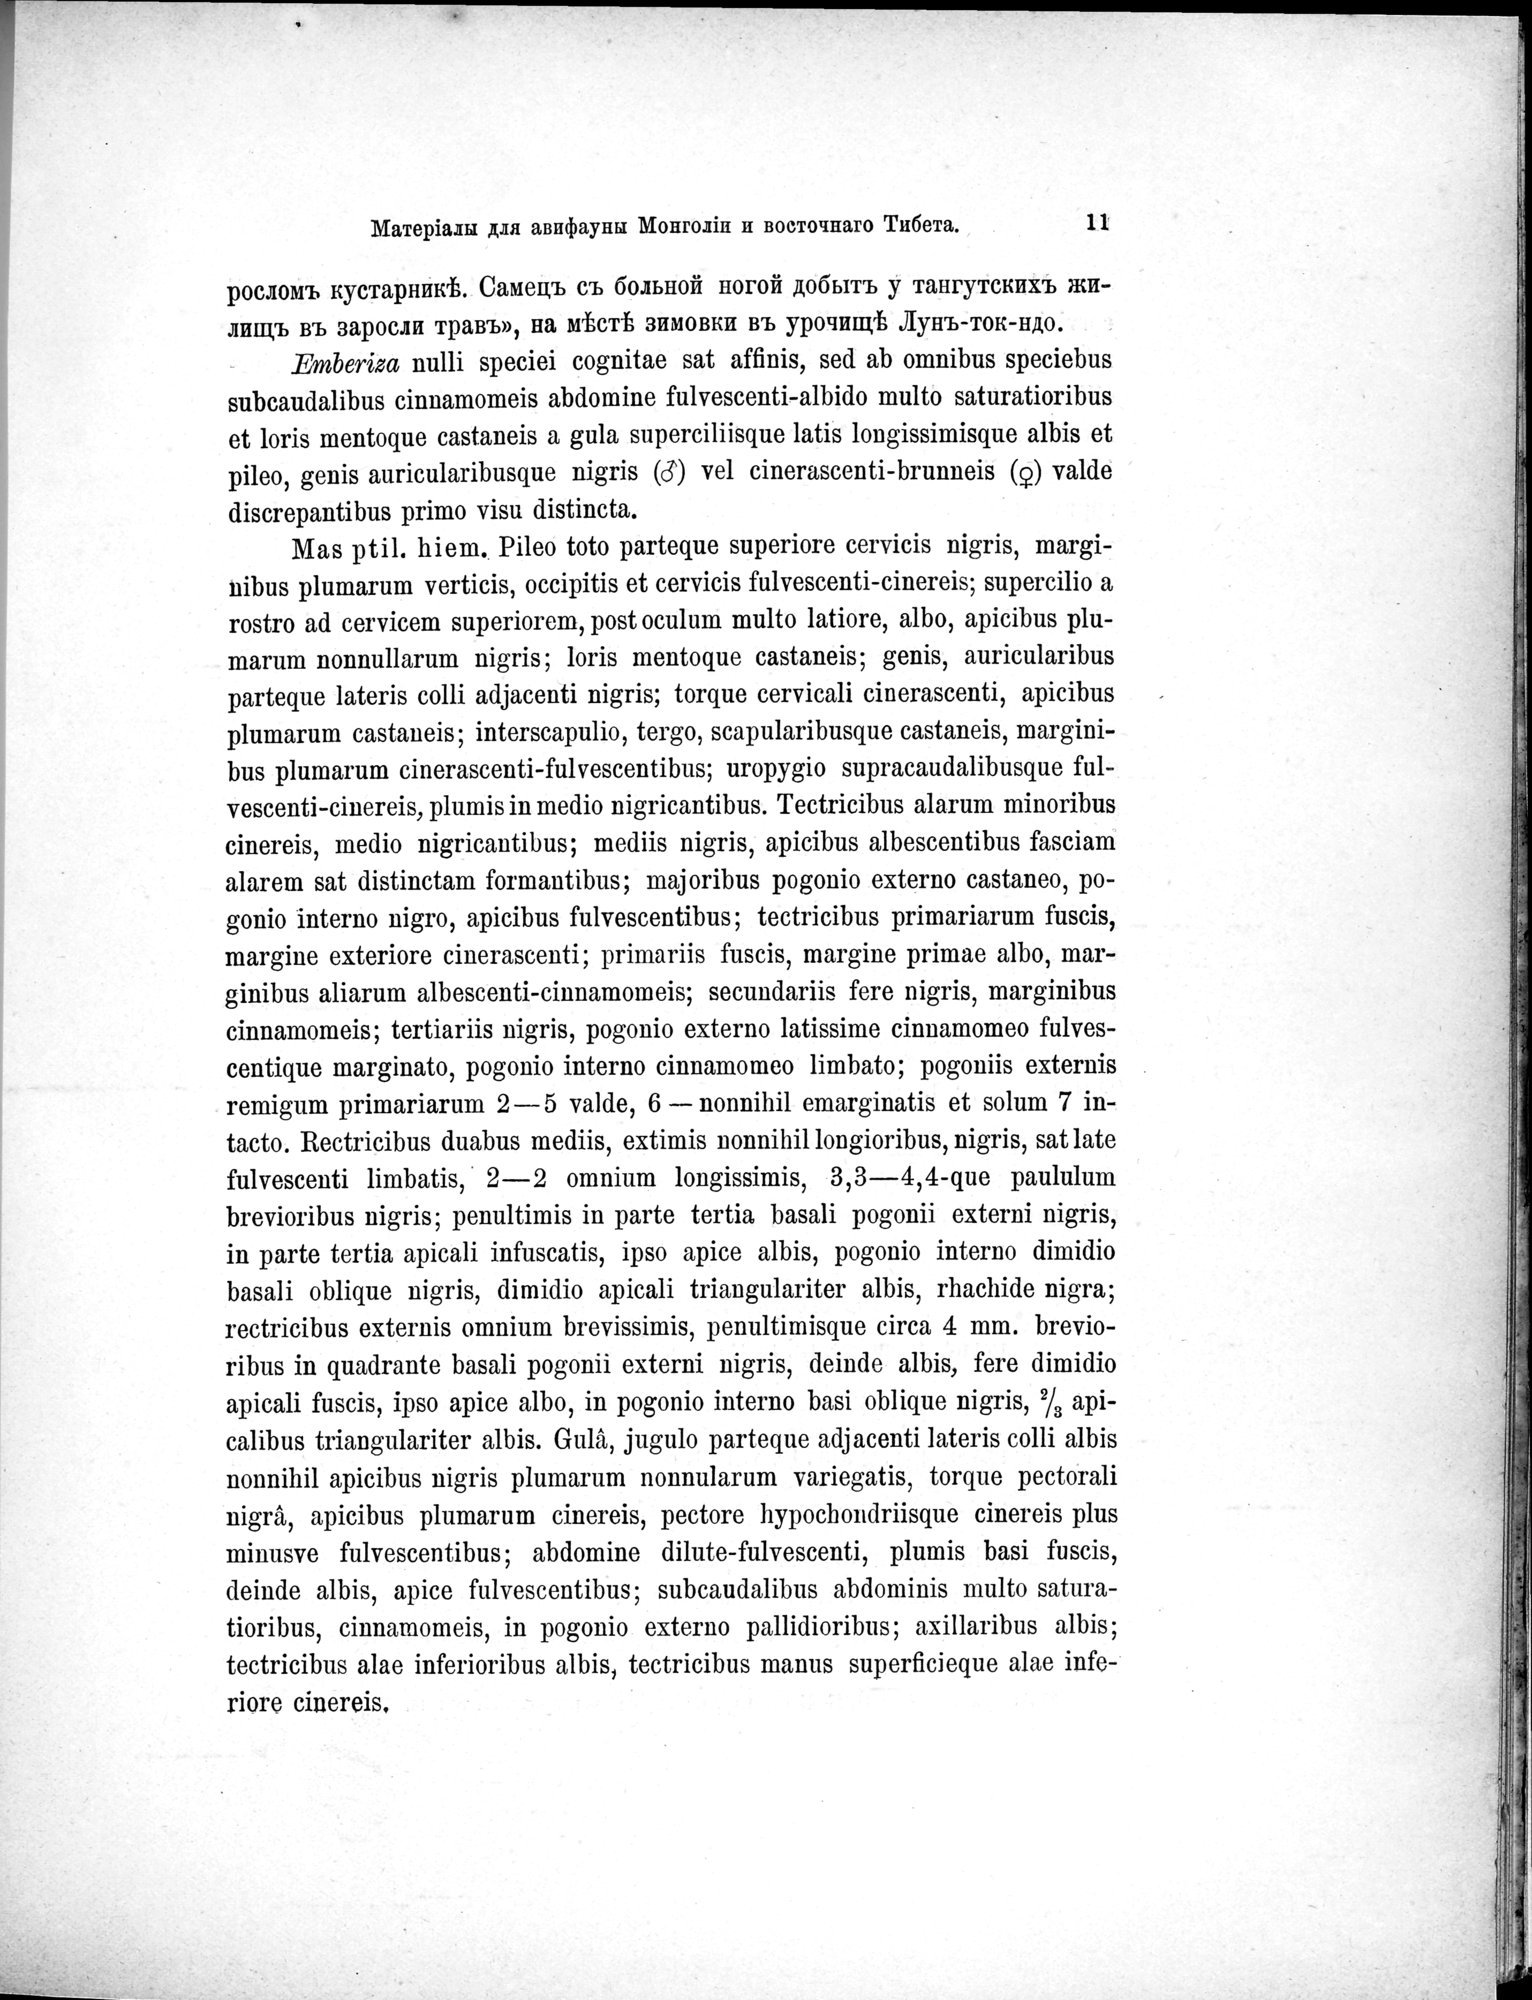 Mongoliia i Kam : vol.5 / Page 83 (Grayscale High Resolution Image)